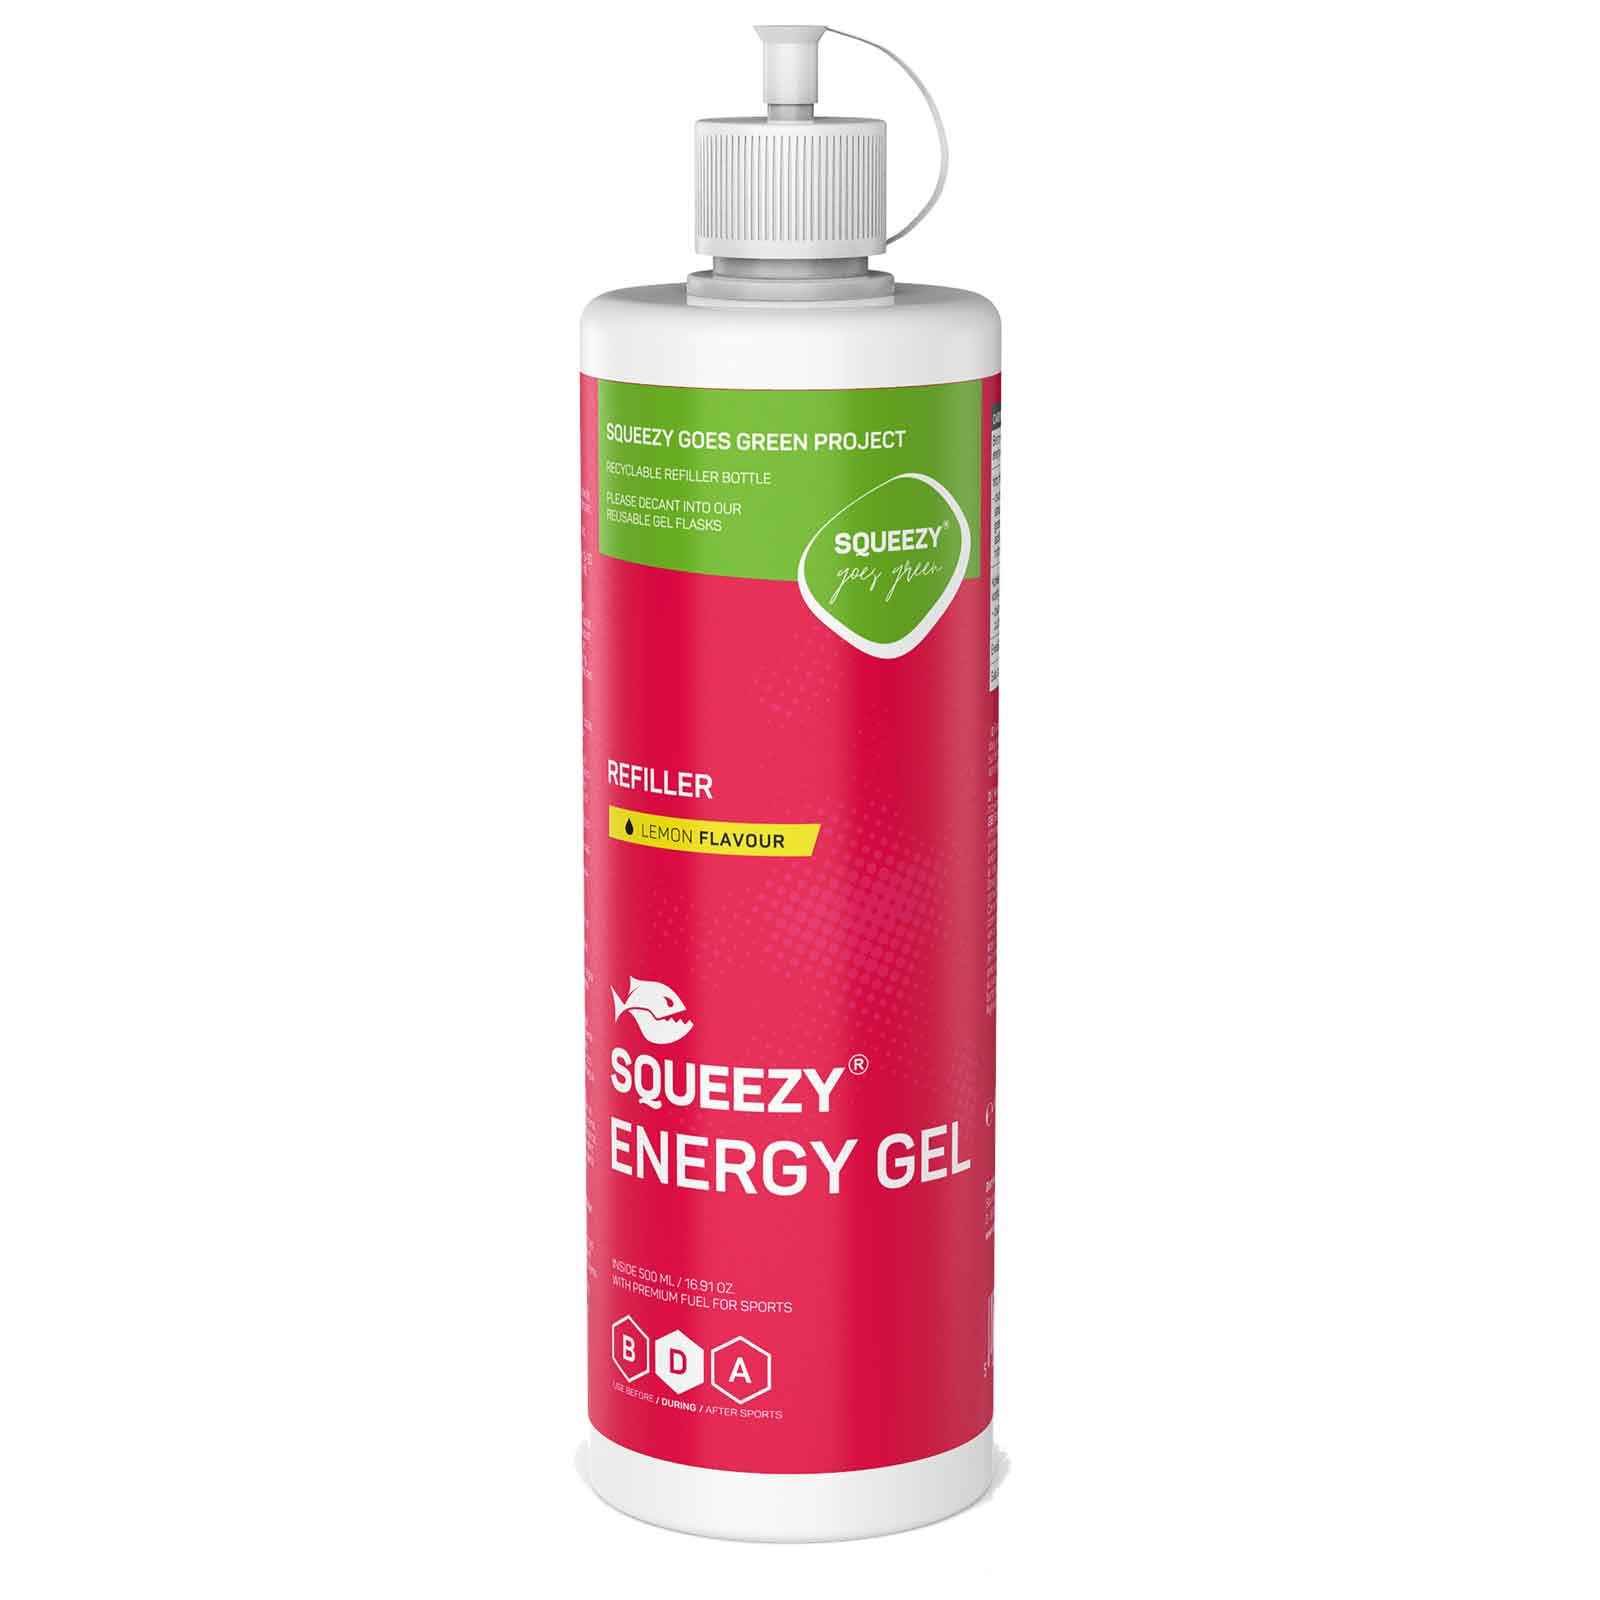 Productfoto van Squeezy Energy Gel Refiller Lemon with Carbohydrates - 500ml